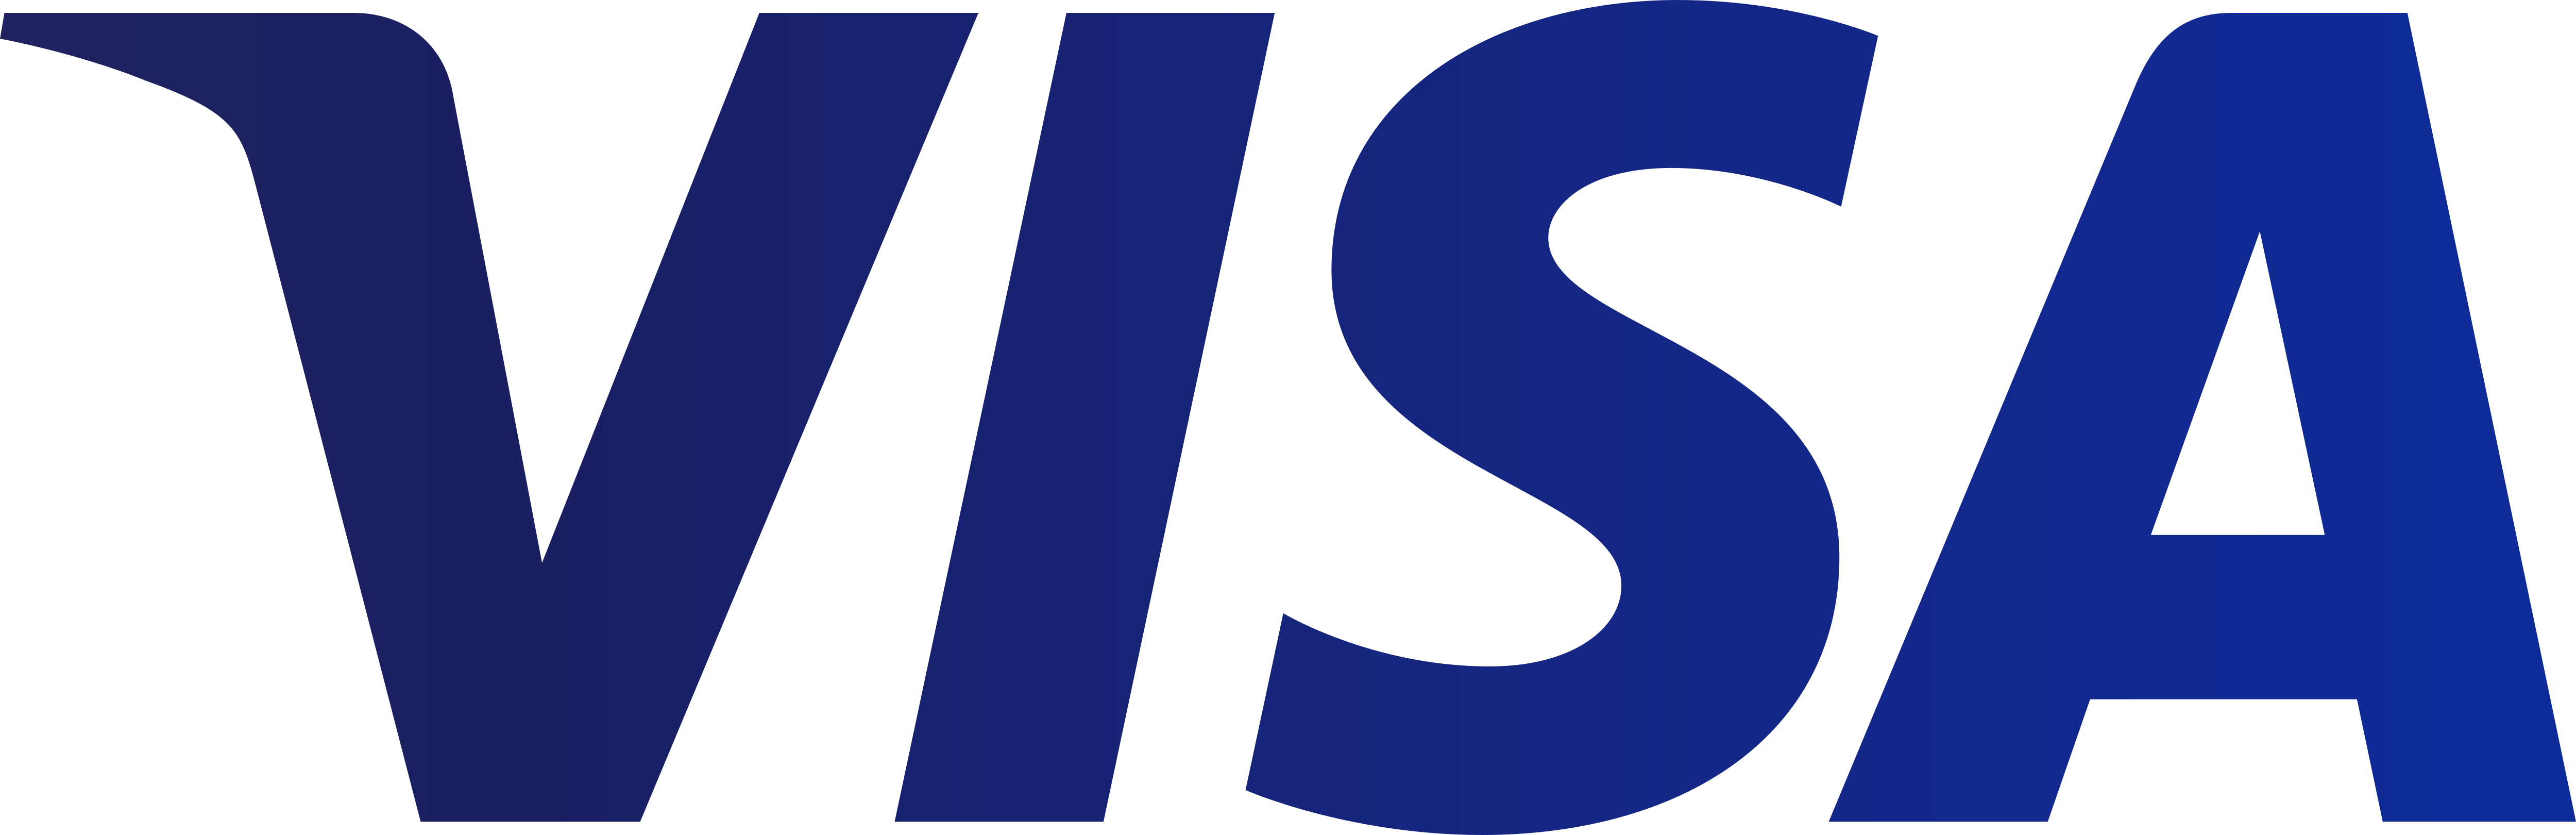 Visa Logos Download